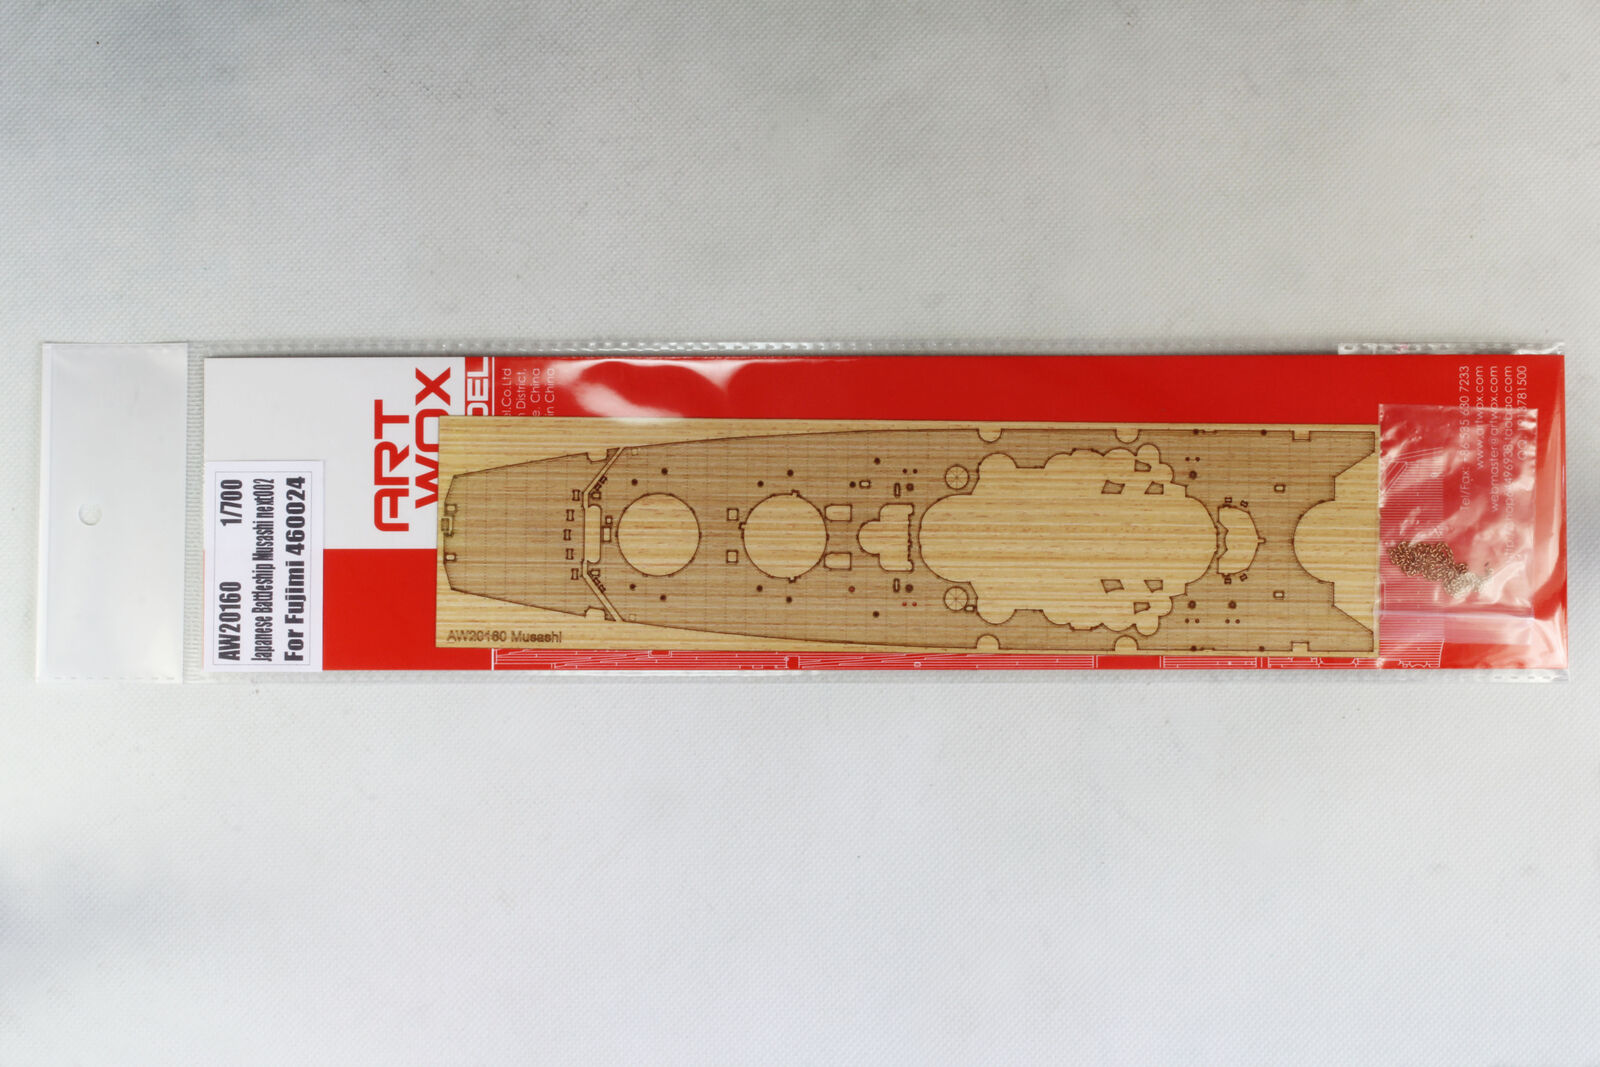 Artwox 1/700 Japanese Musashi Next 002 Wooden Deck Set for Fujimi kit #460024